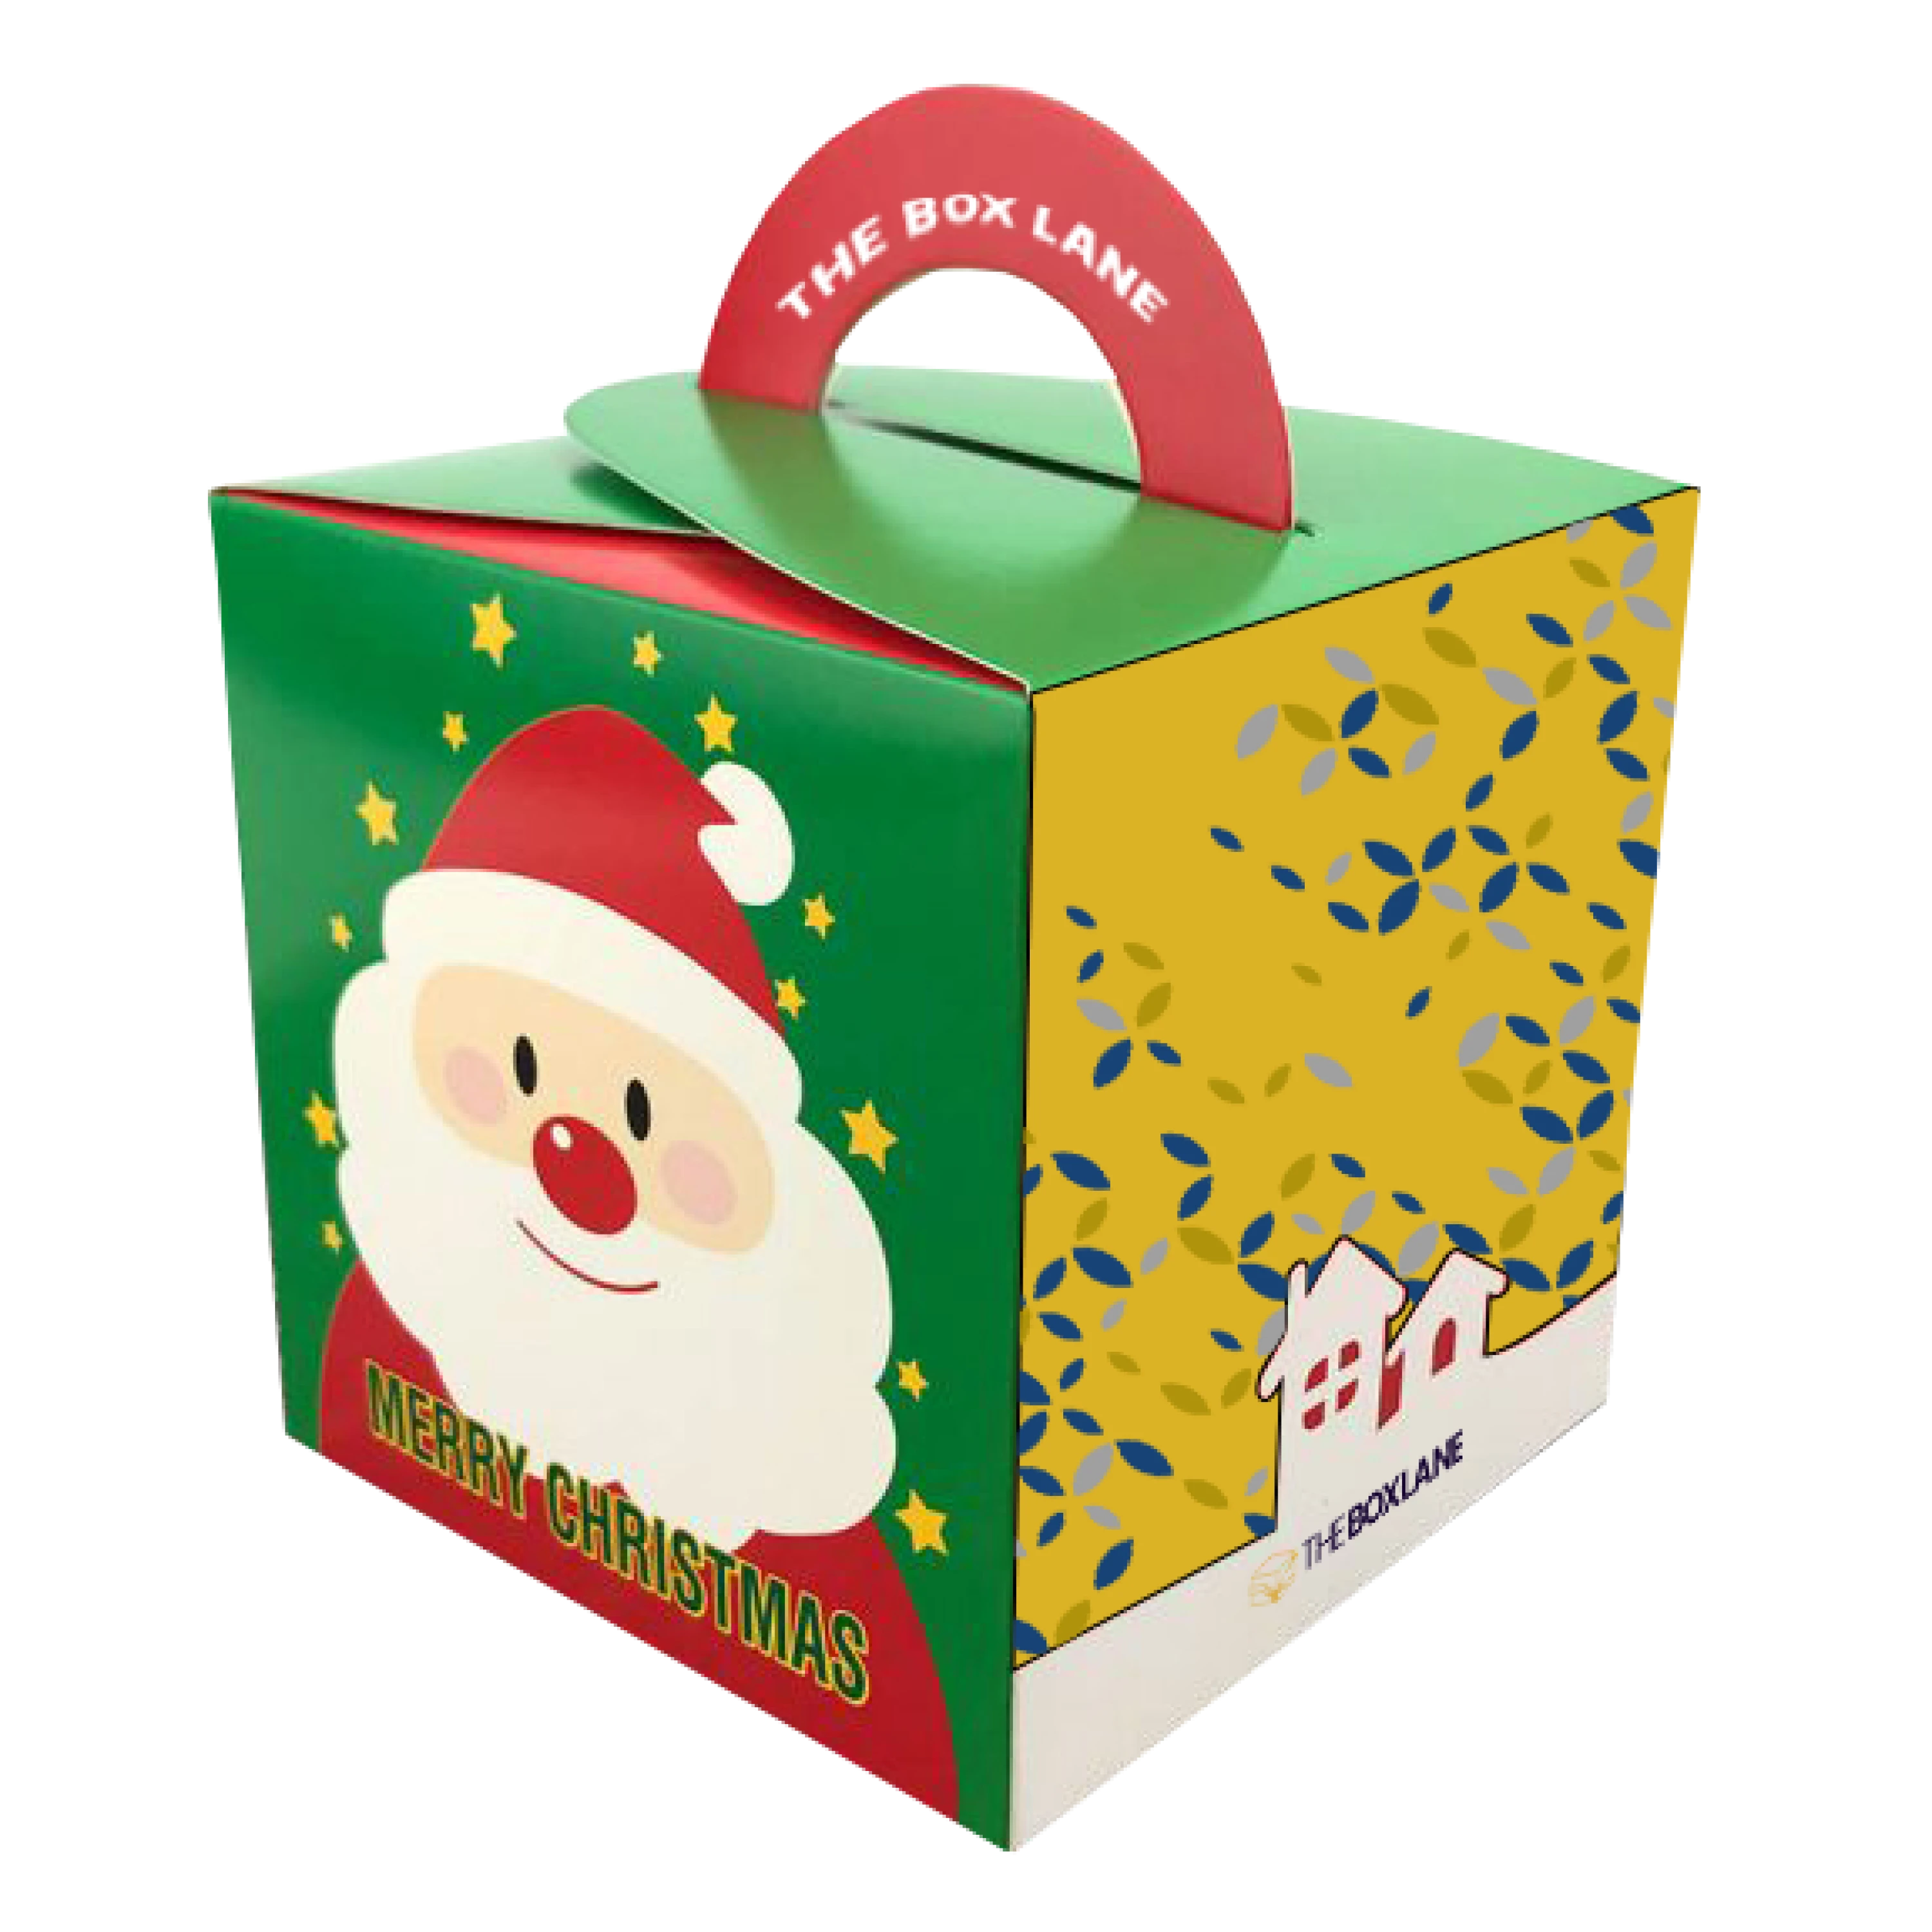 Carousel Christmas Gable Boxes packaging image 3 | The Box Lane